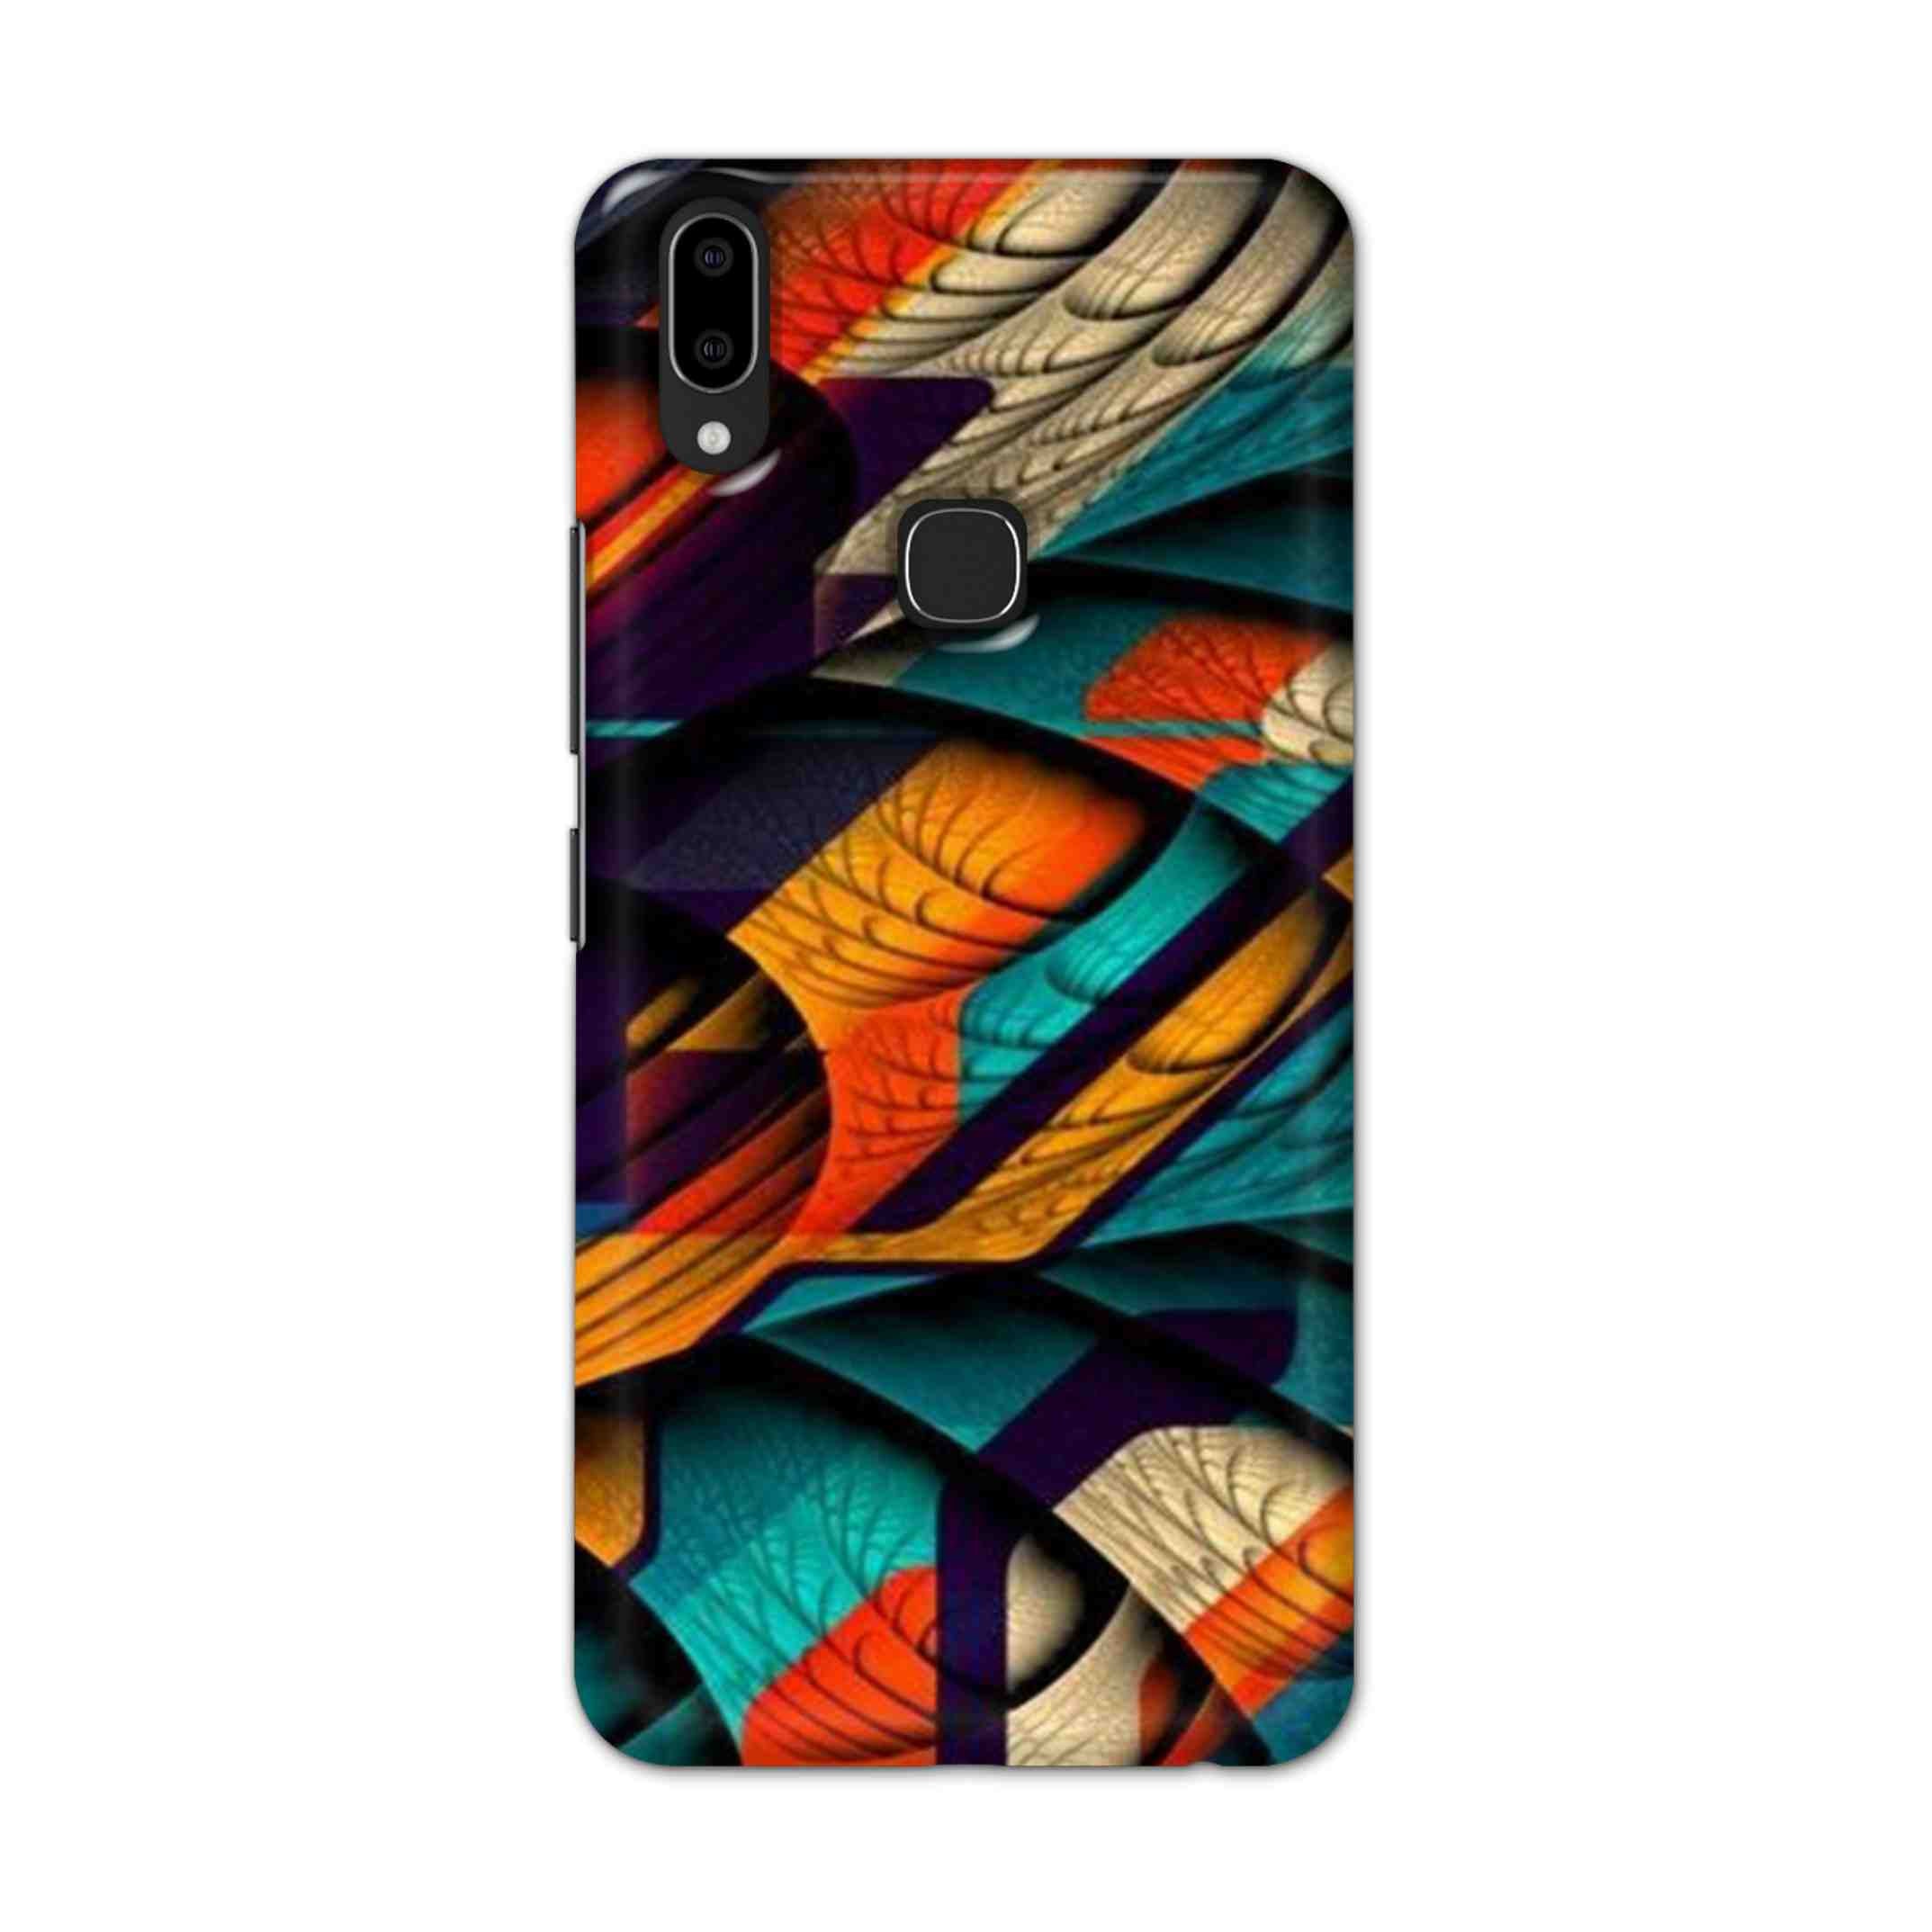 Buy Colour Abstract Hard Back Mobile Phone Case Cover For Vivo V9 / V9 Youth Online